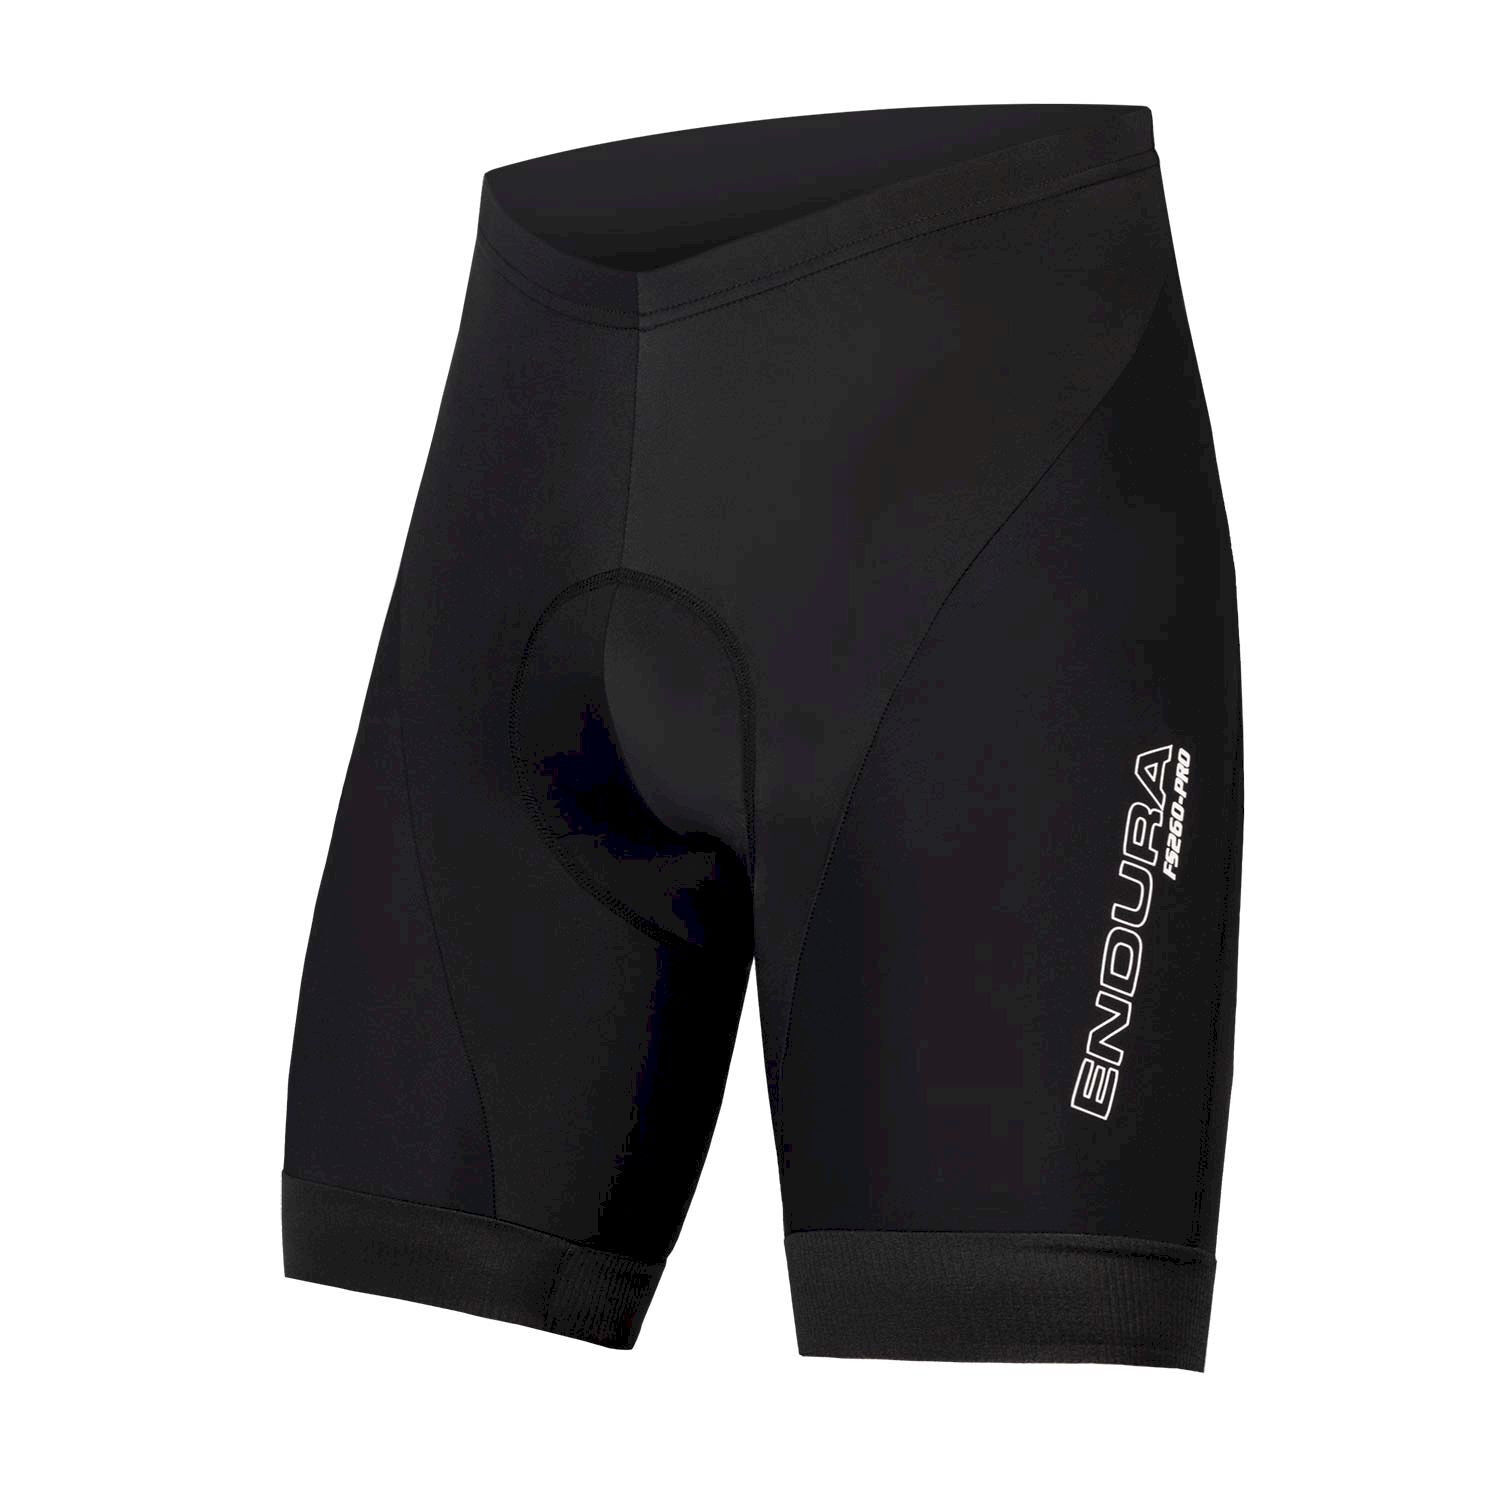 Endura FS260-Pro Short - Cycling shorts - Men's